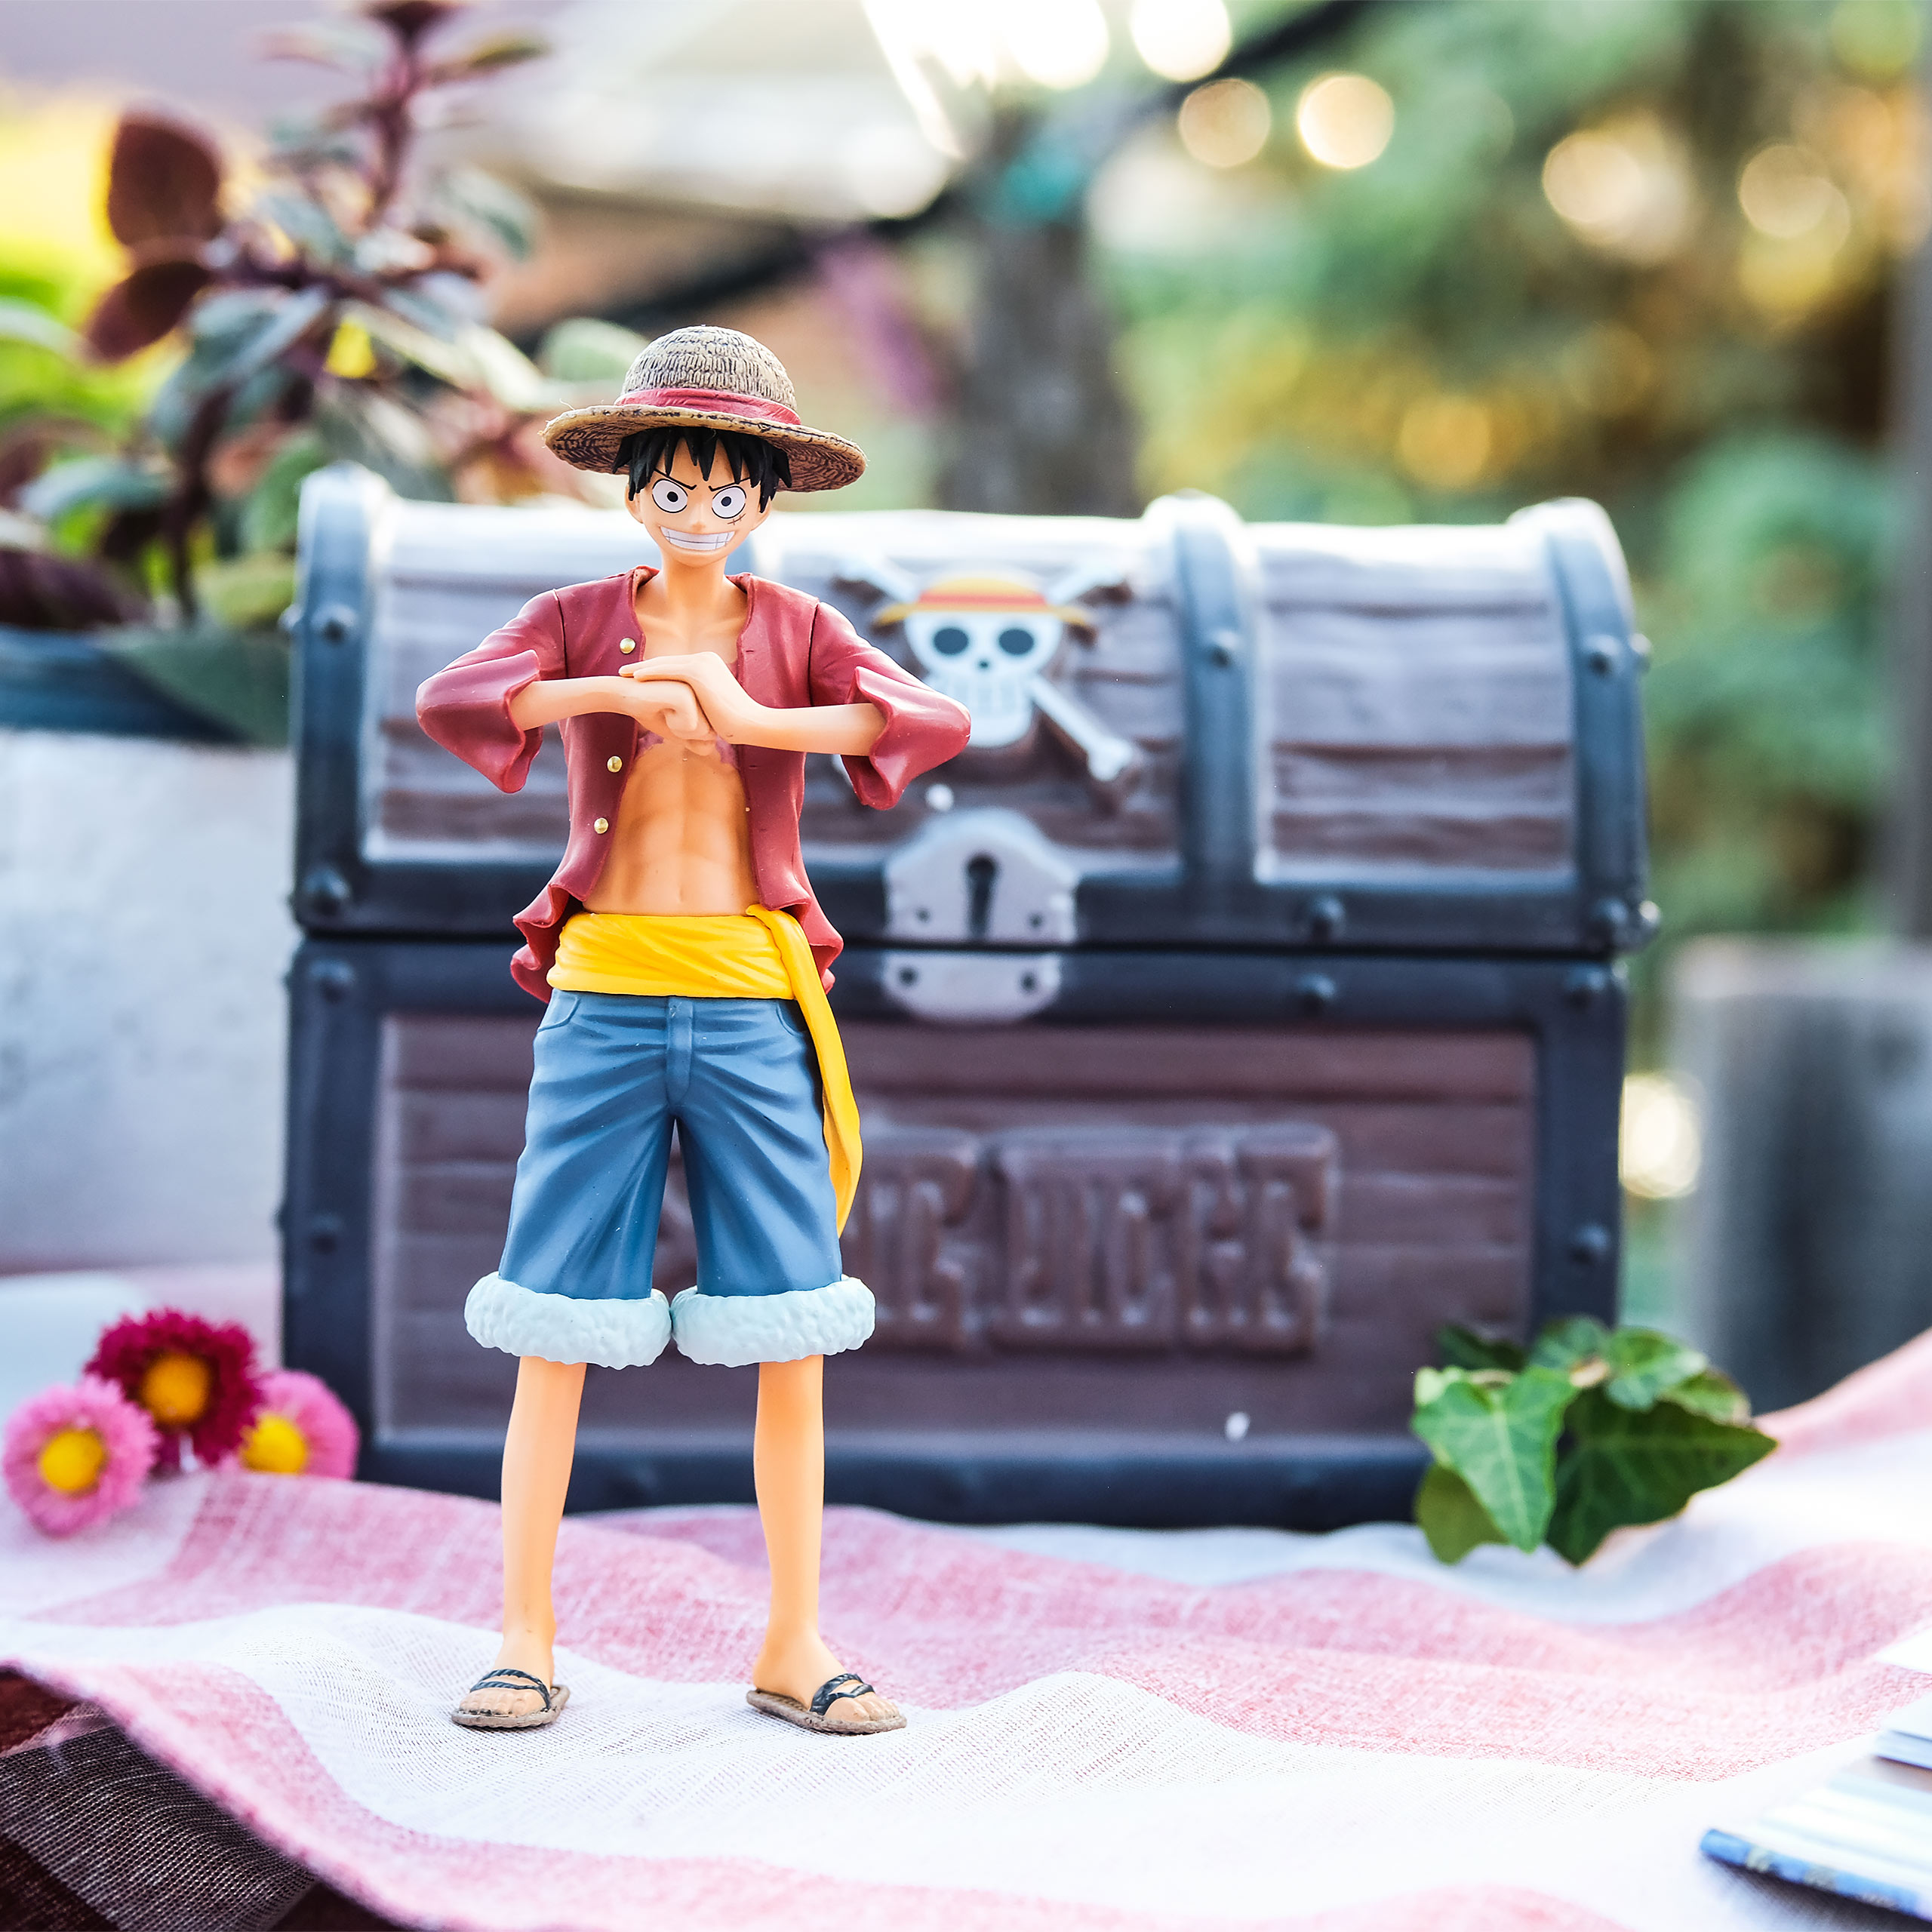 One Piece - Monkey D. Luffy SFC Figur 17 cm